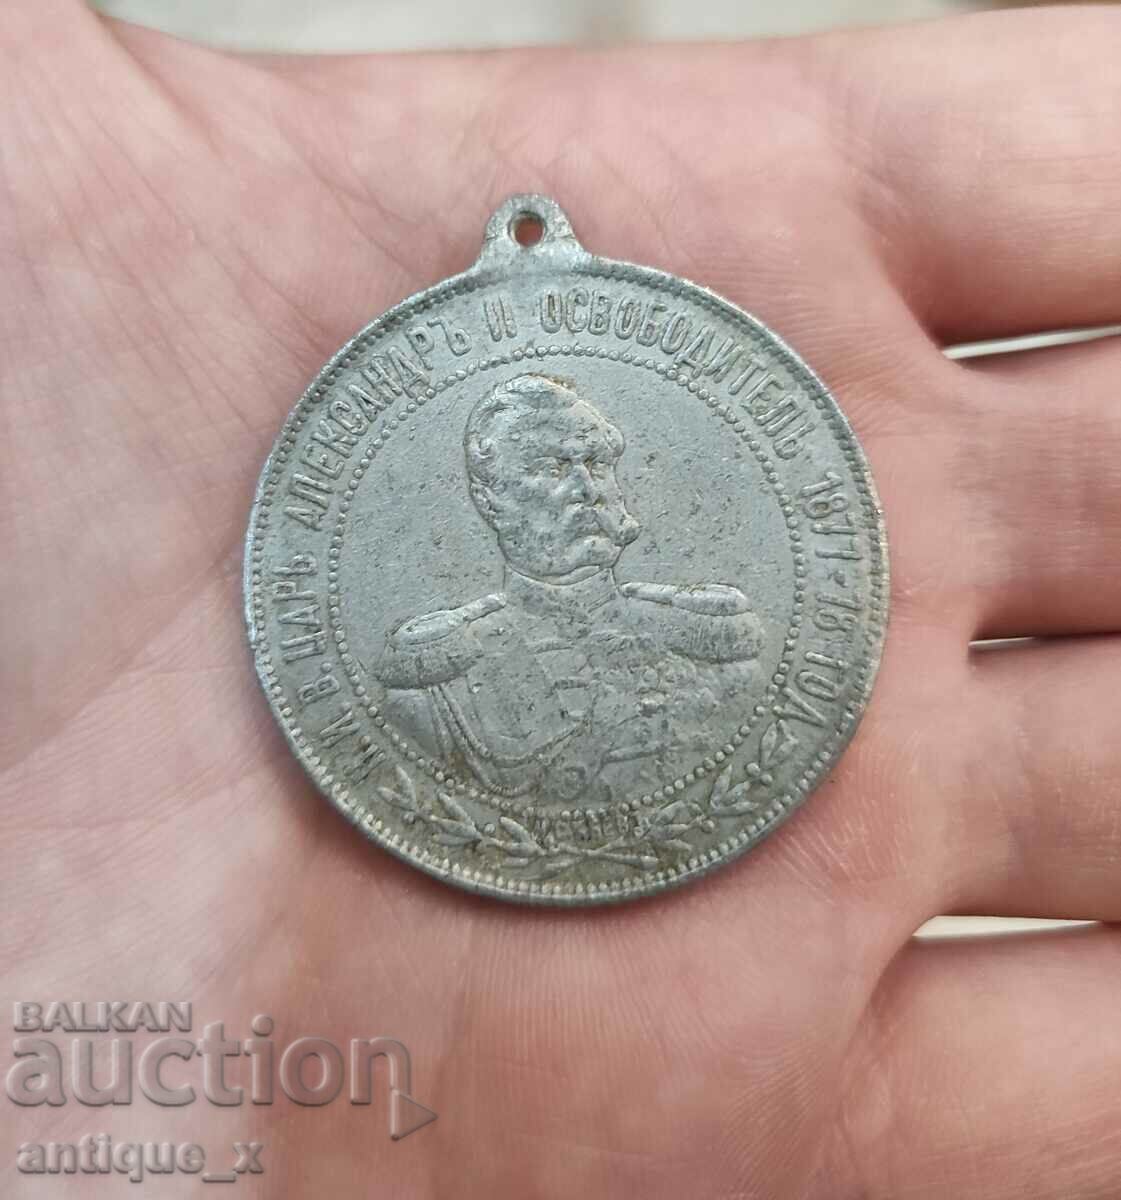 Български царски алуминиев медал-Шипка-цар Освободител